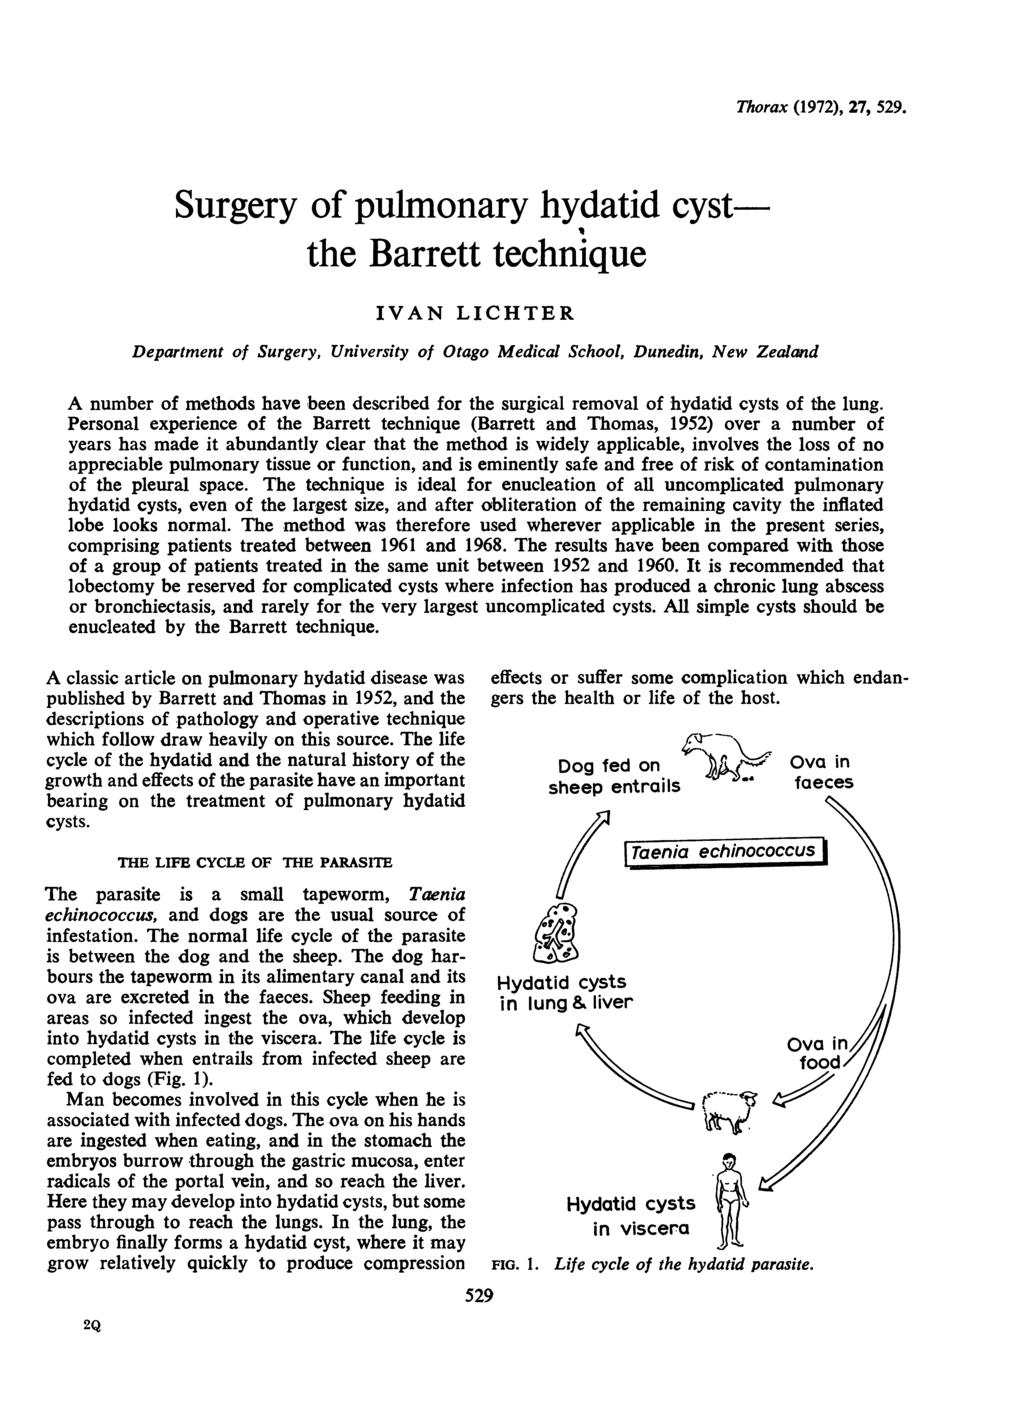 Surgery of pulmonary hydatid cystthe Barrett technique IVAN LICHTER Department of Surgery, University of Otago Medical School, Dunedin, New Zealand Thorax (1972), 27, 529.